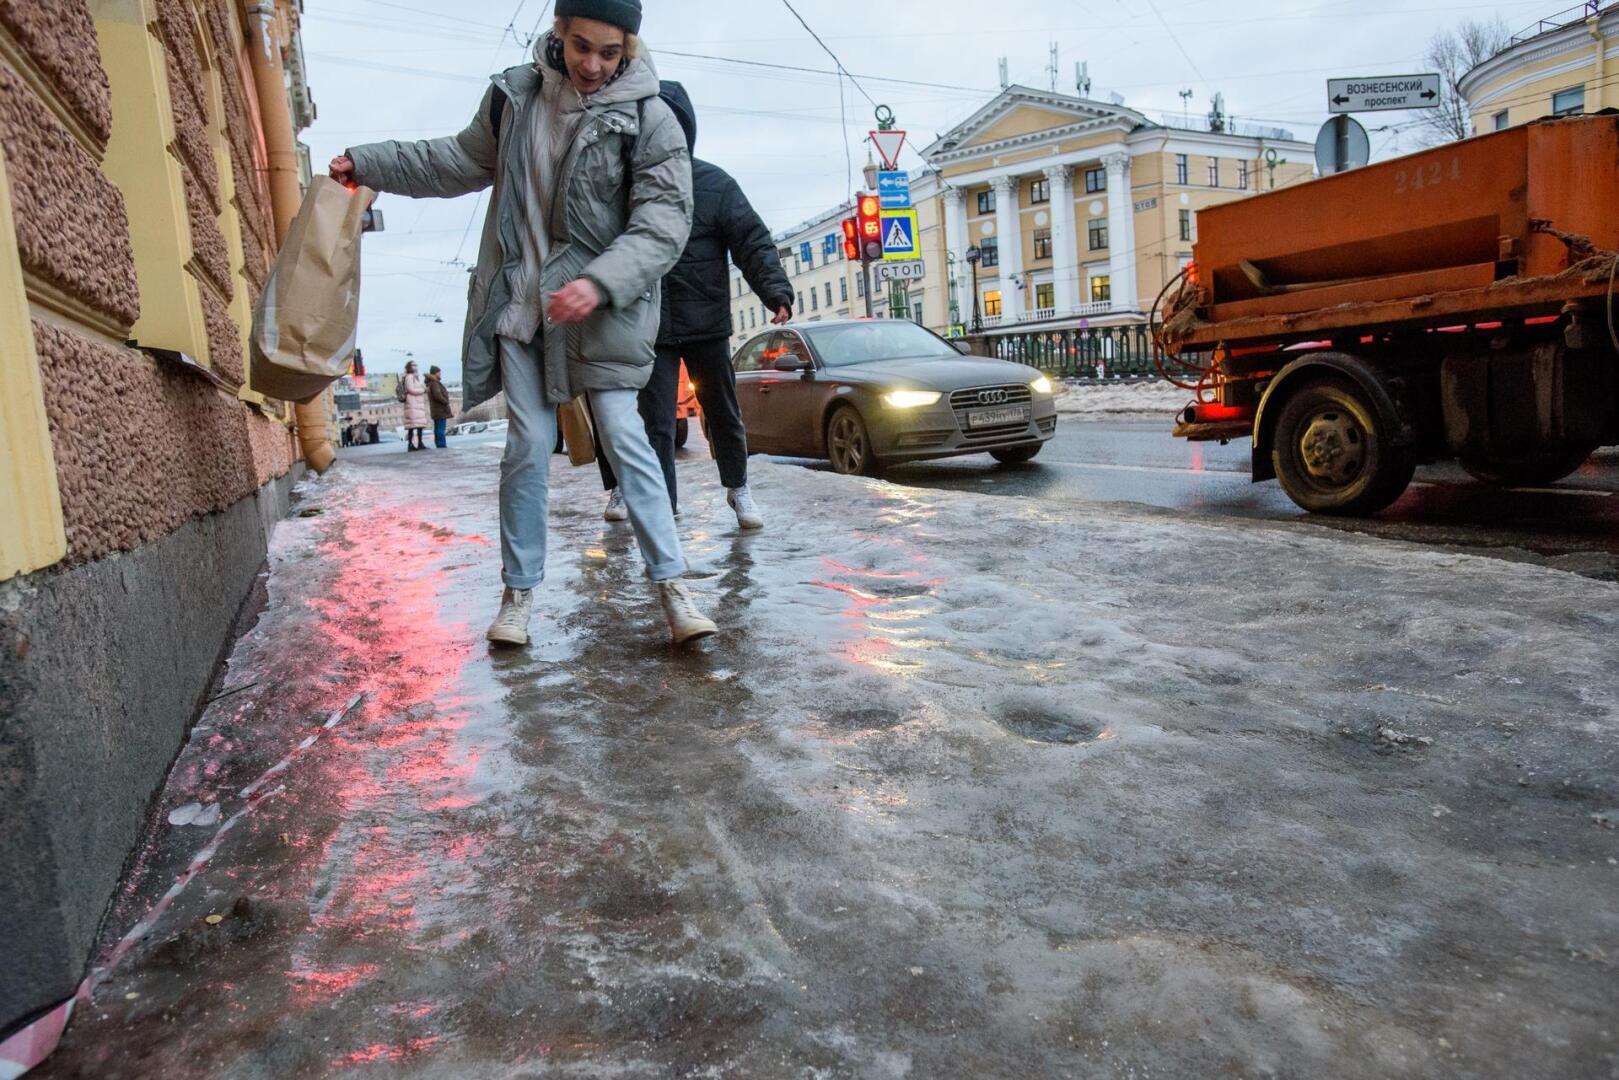 санкт петербург сегодня фото погода